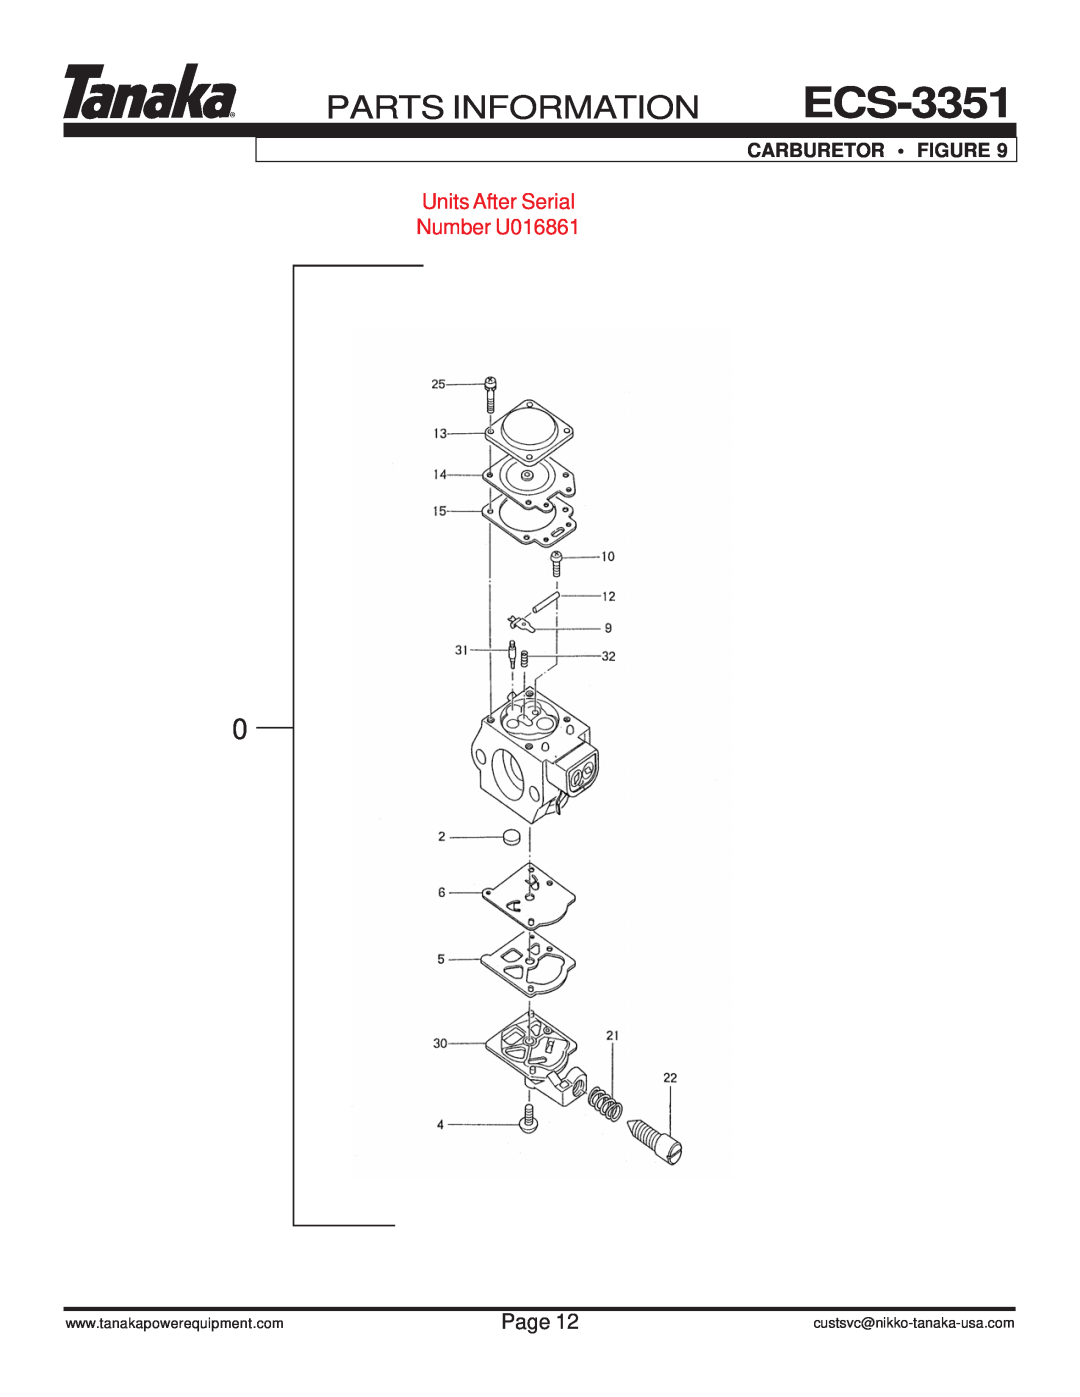 Tanaka ECS-3351/B manual Units After Serial Number U016861, Parts Information, Carburetor Figure, Page 